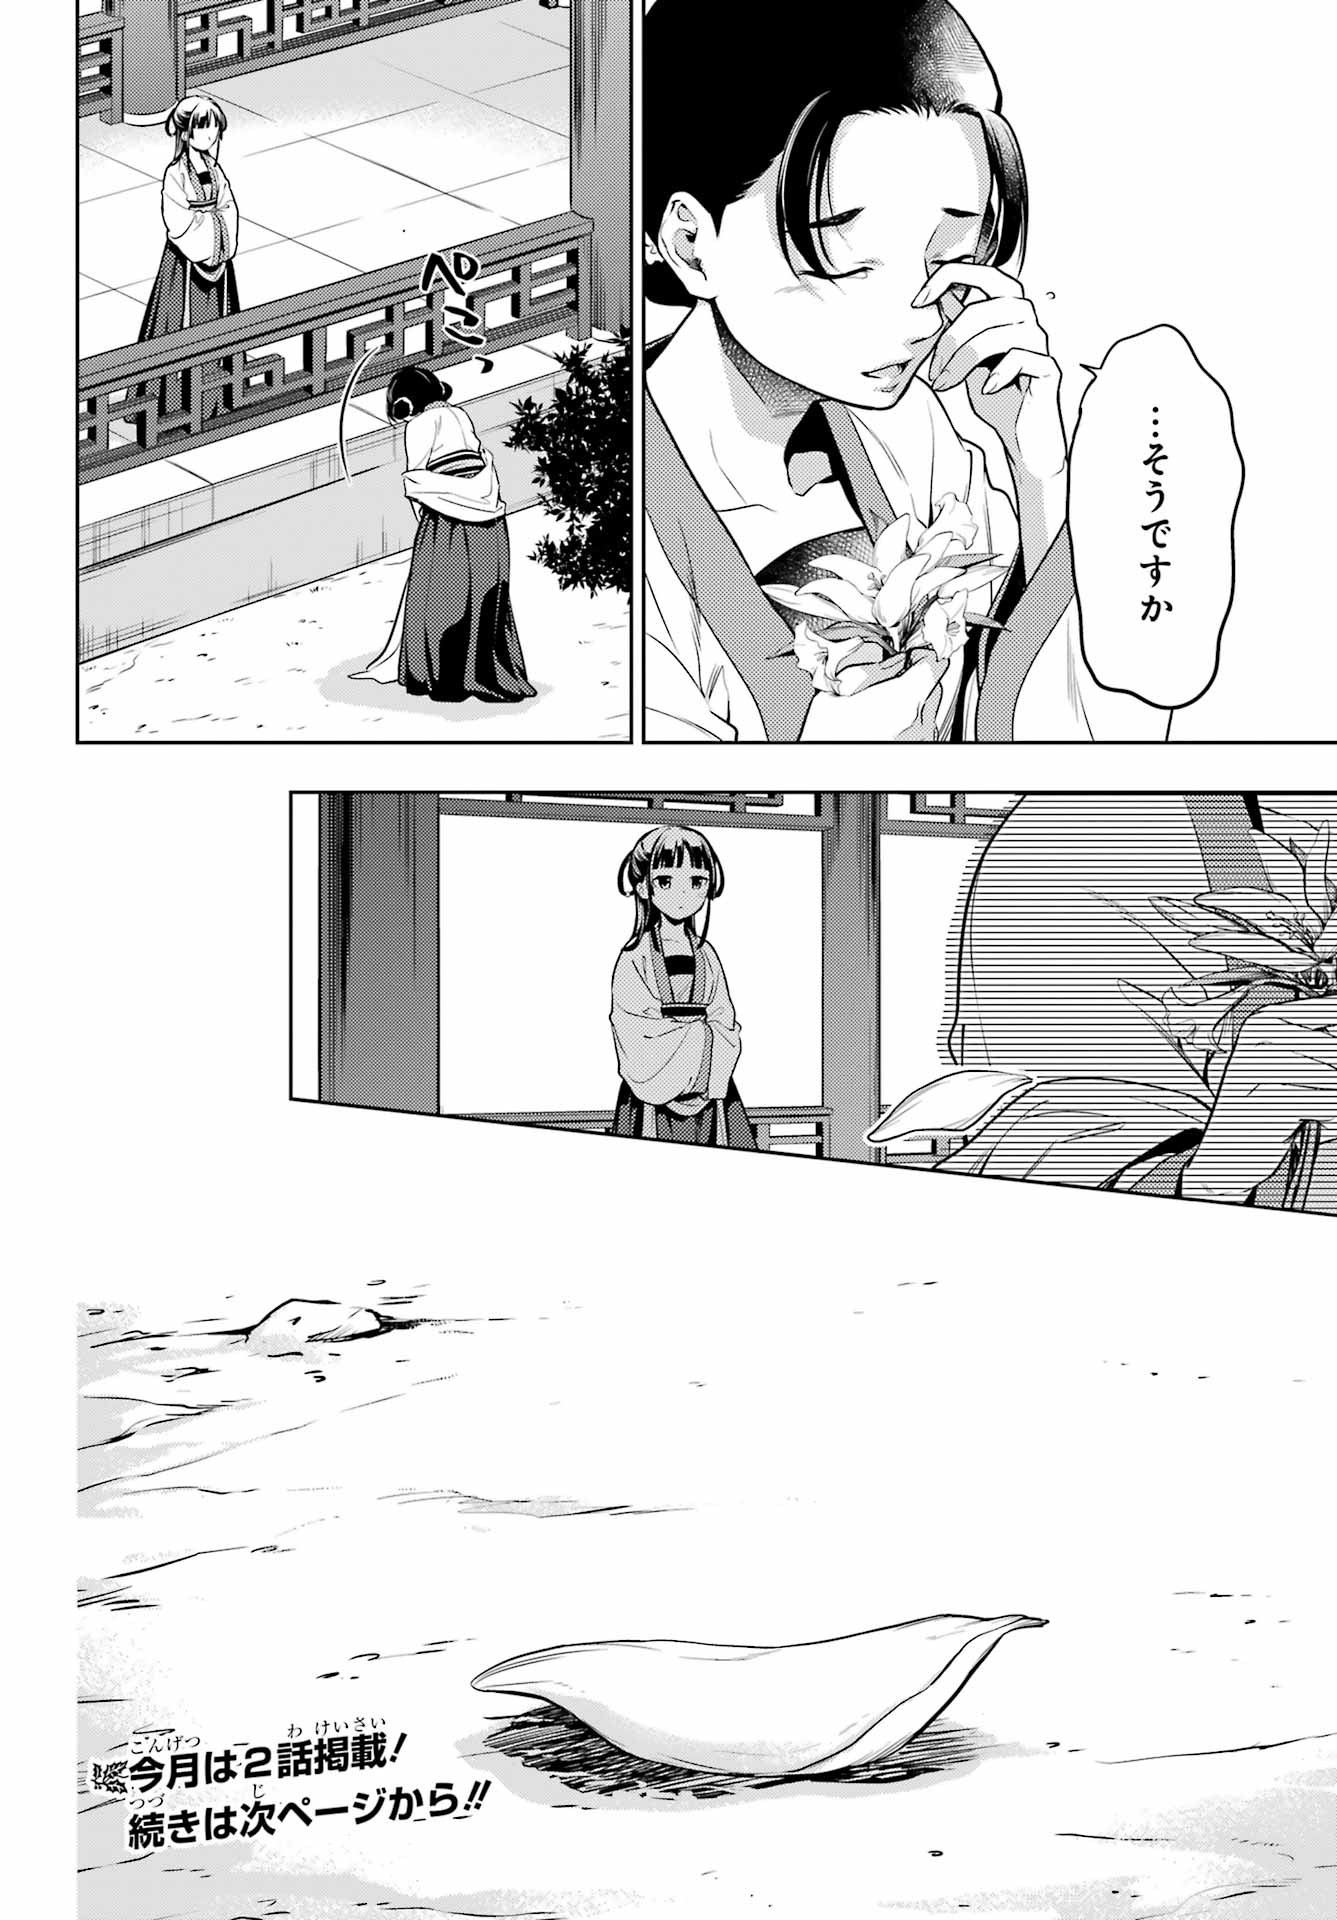 Kusuriya no Hitorigoto - Chapter 52-2 - Page 17